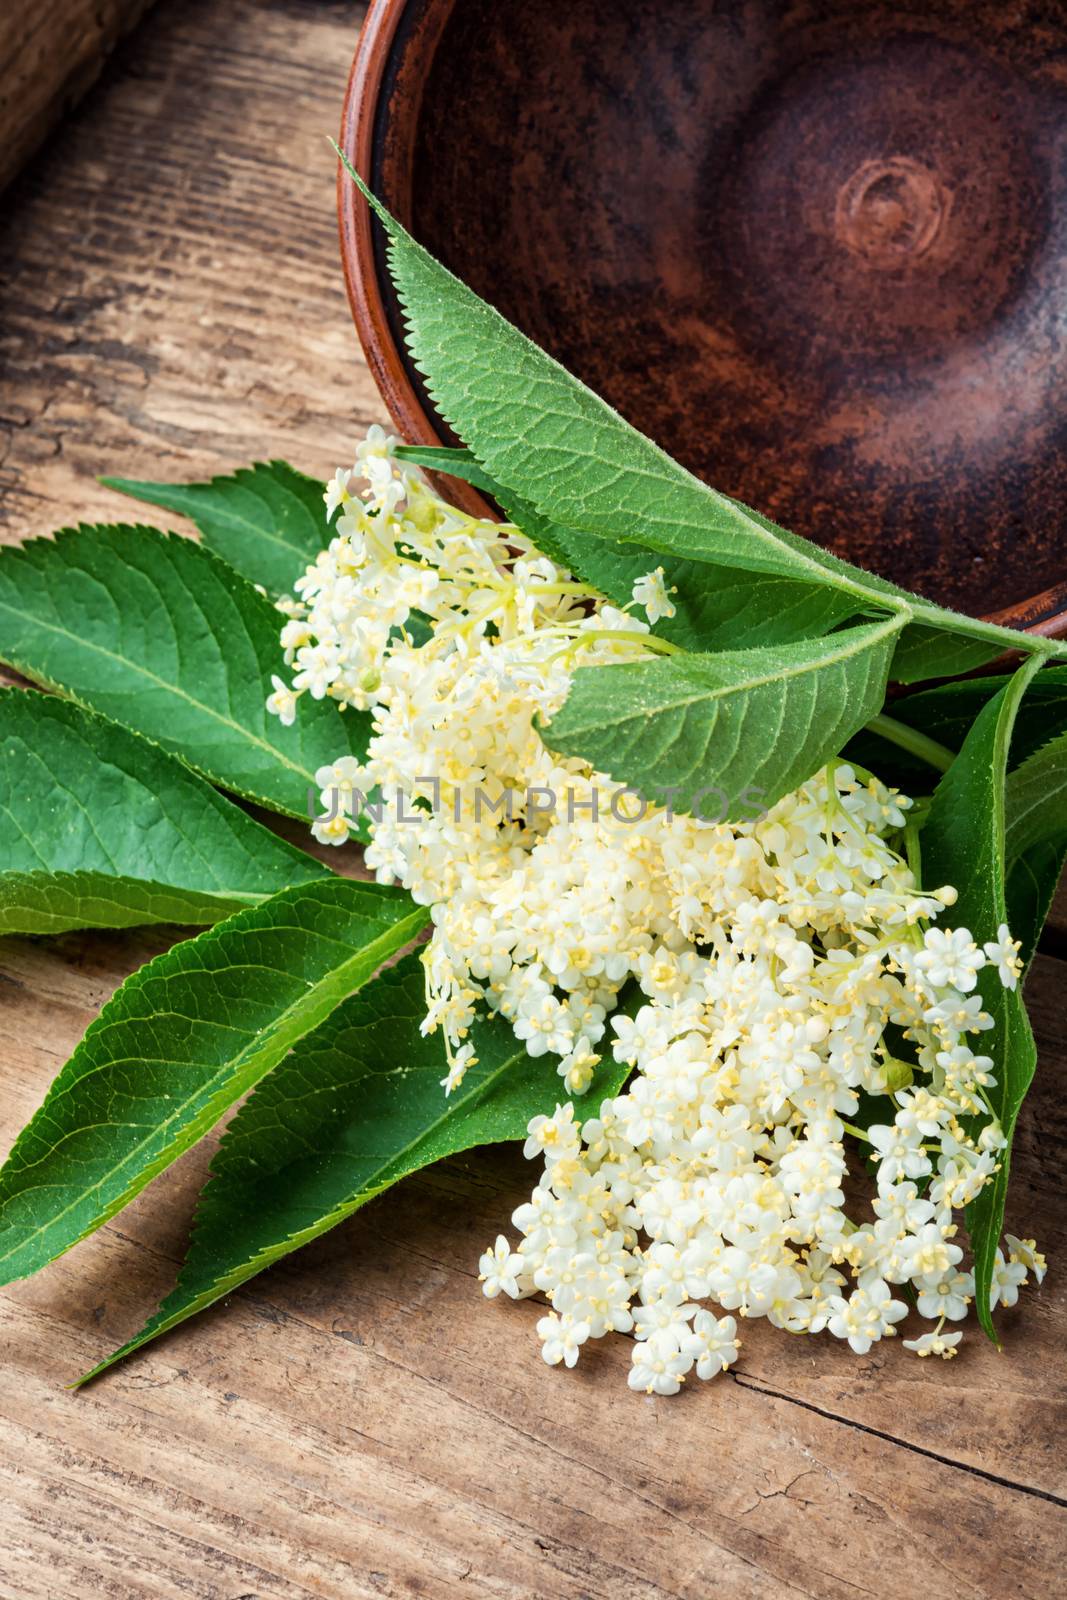 Elderberry inflorescences on a wooden table.Herbal medicine